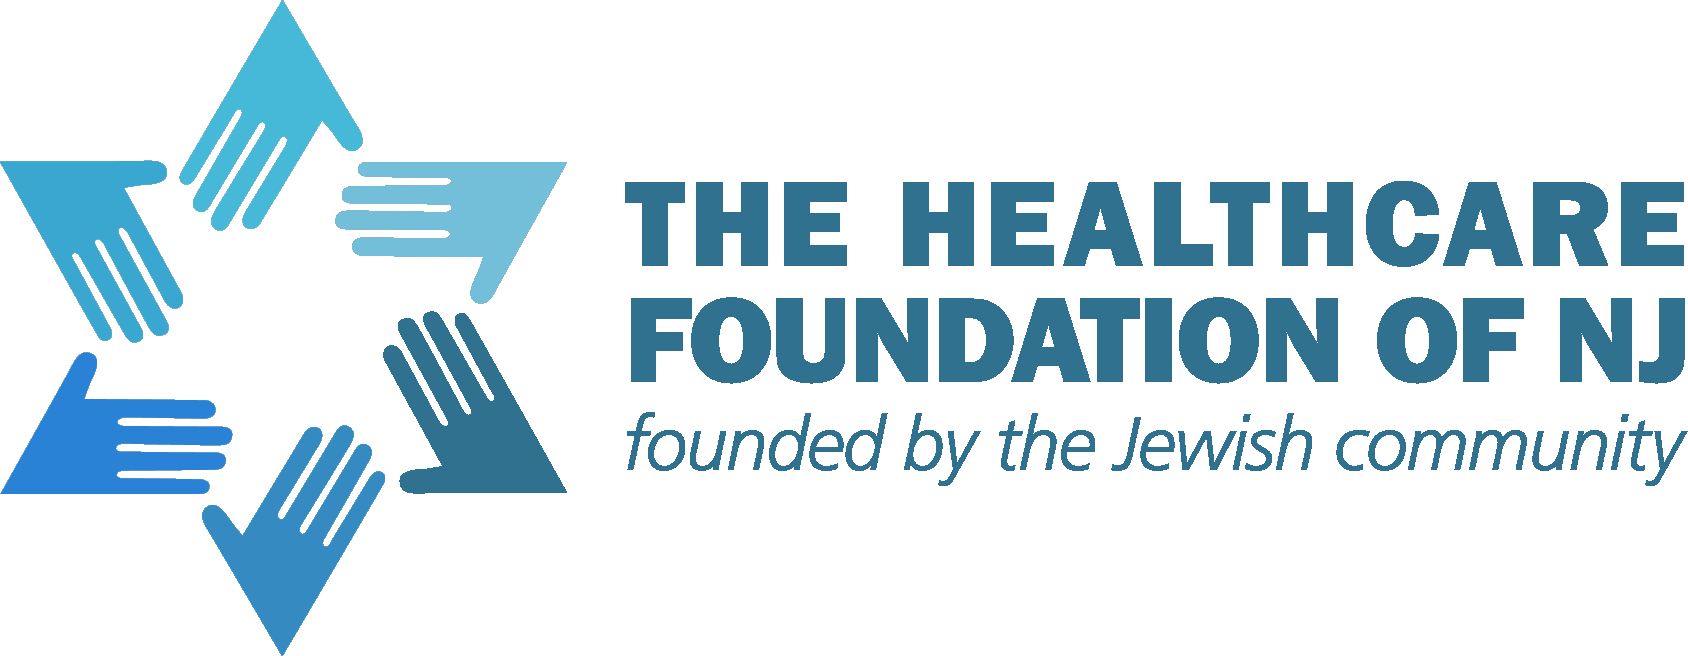 Healthcare Foundation